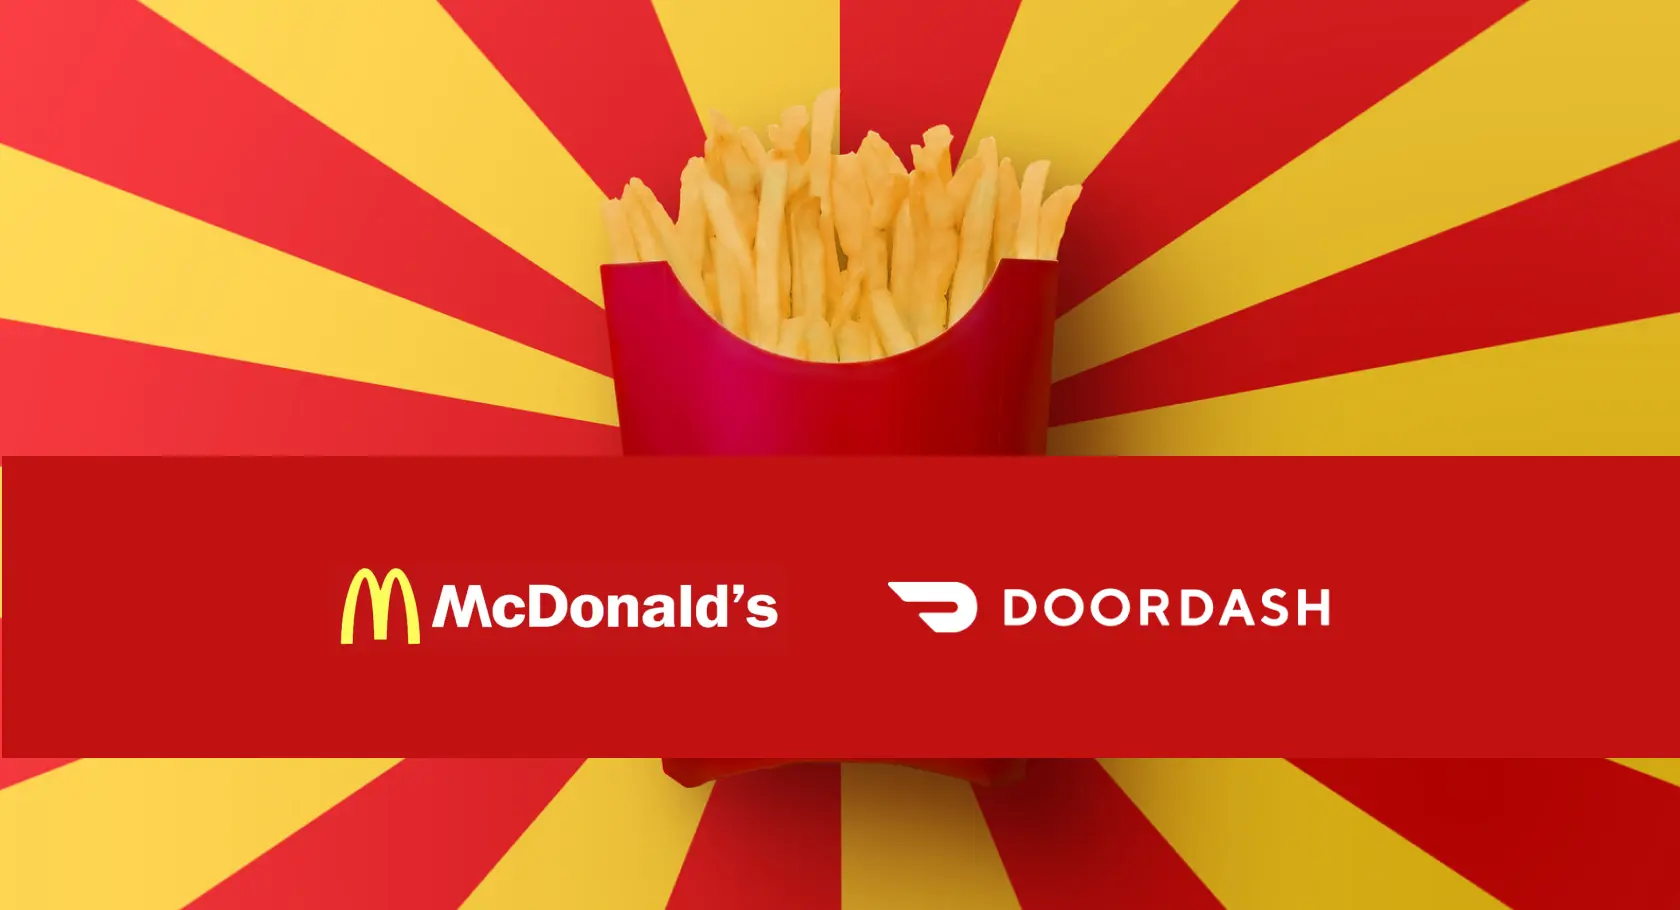 Can You Use McDonald’s Coupons On Doordash